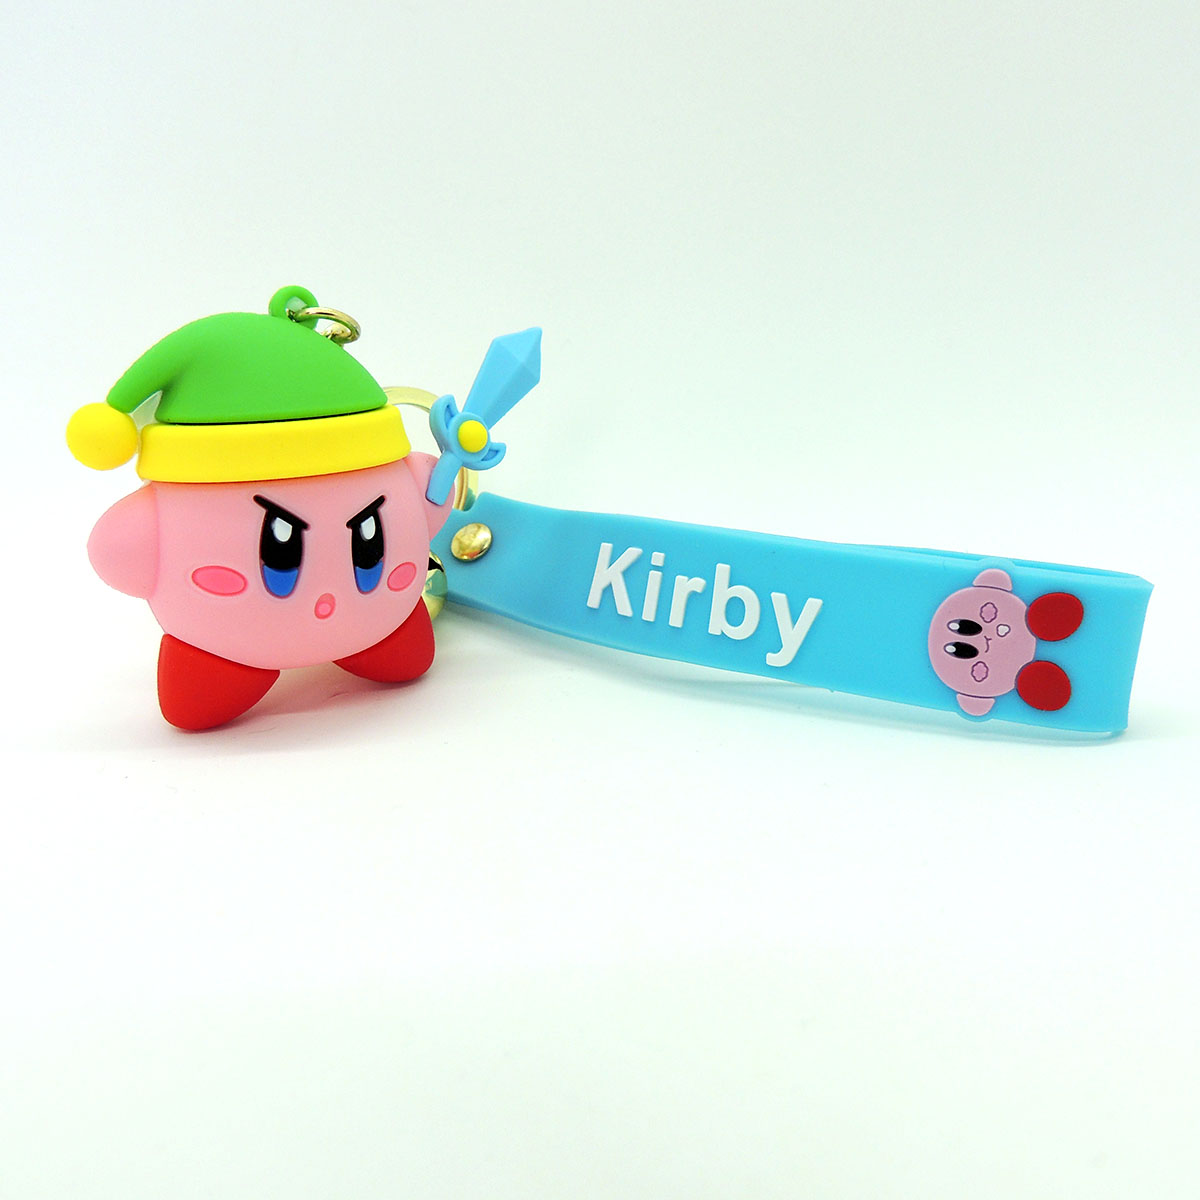 Kirby Archives - Madtoyz